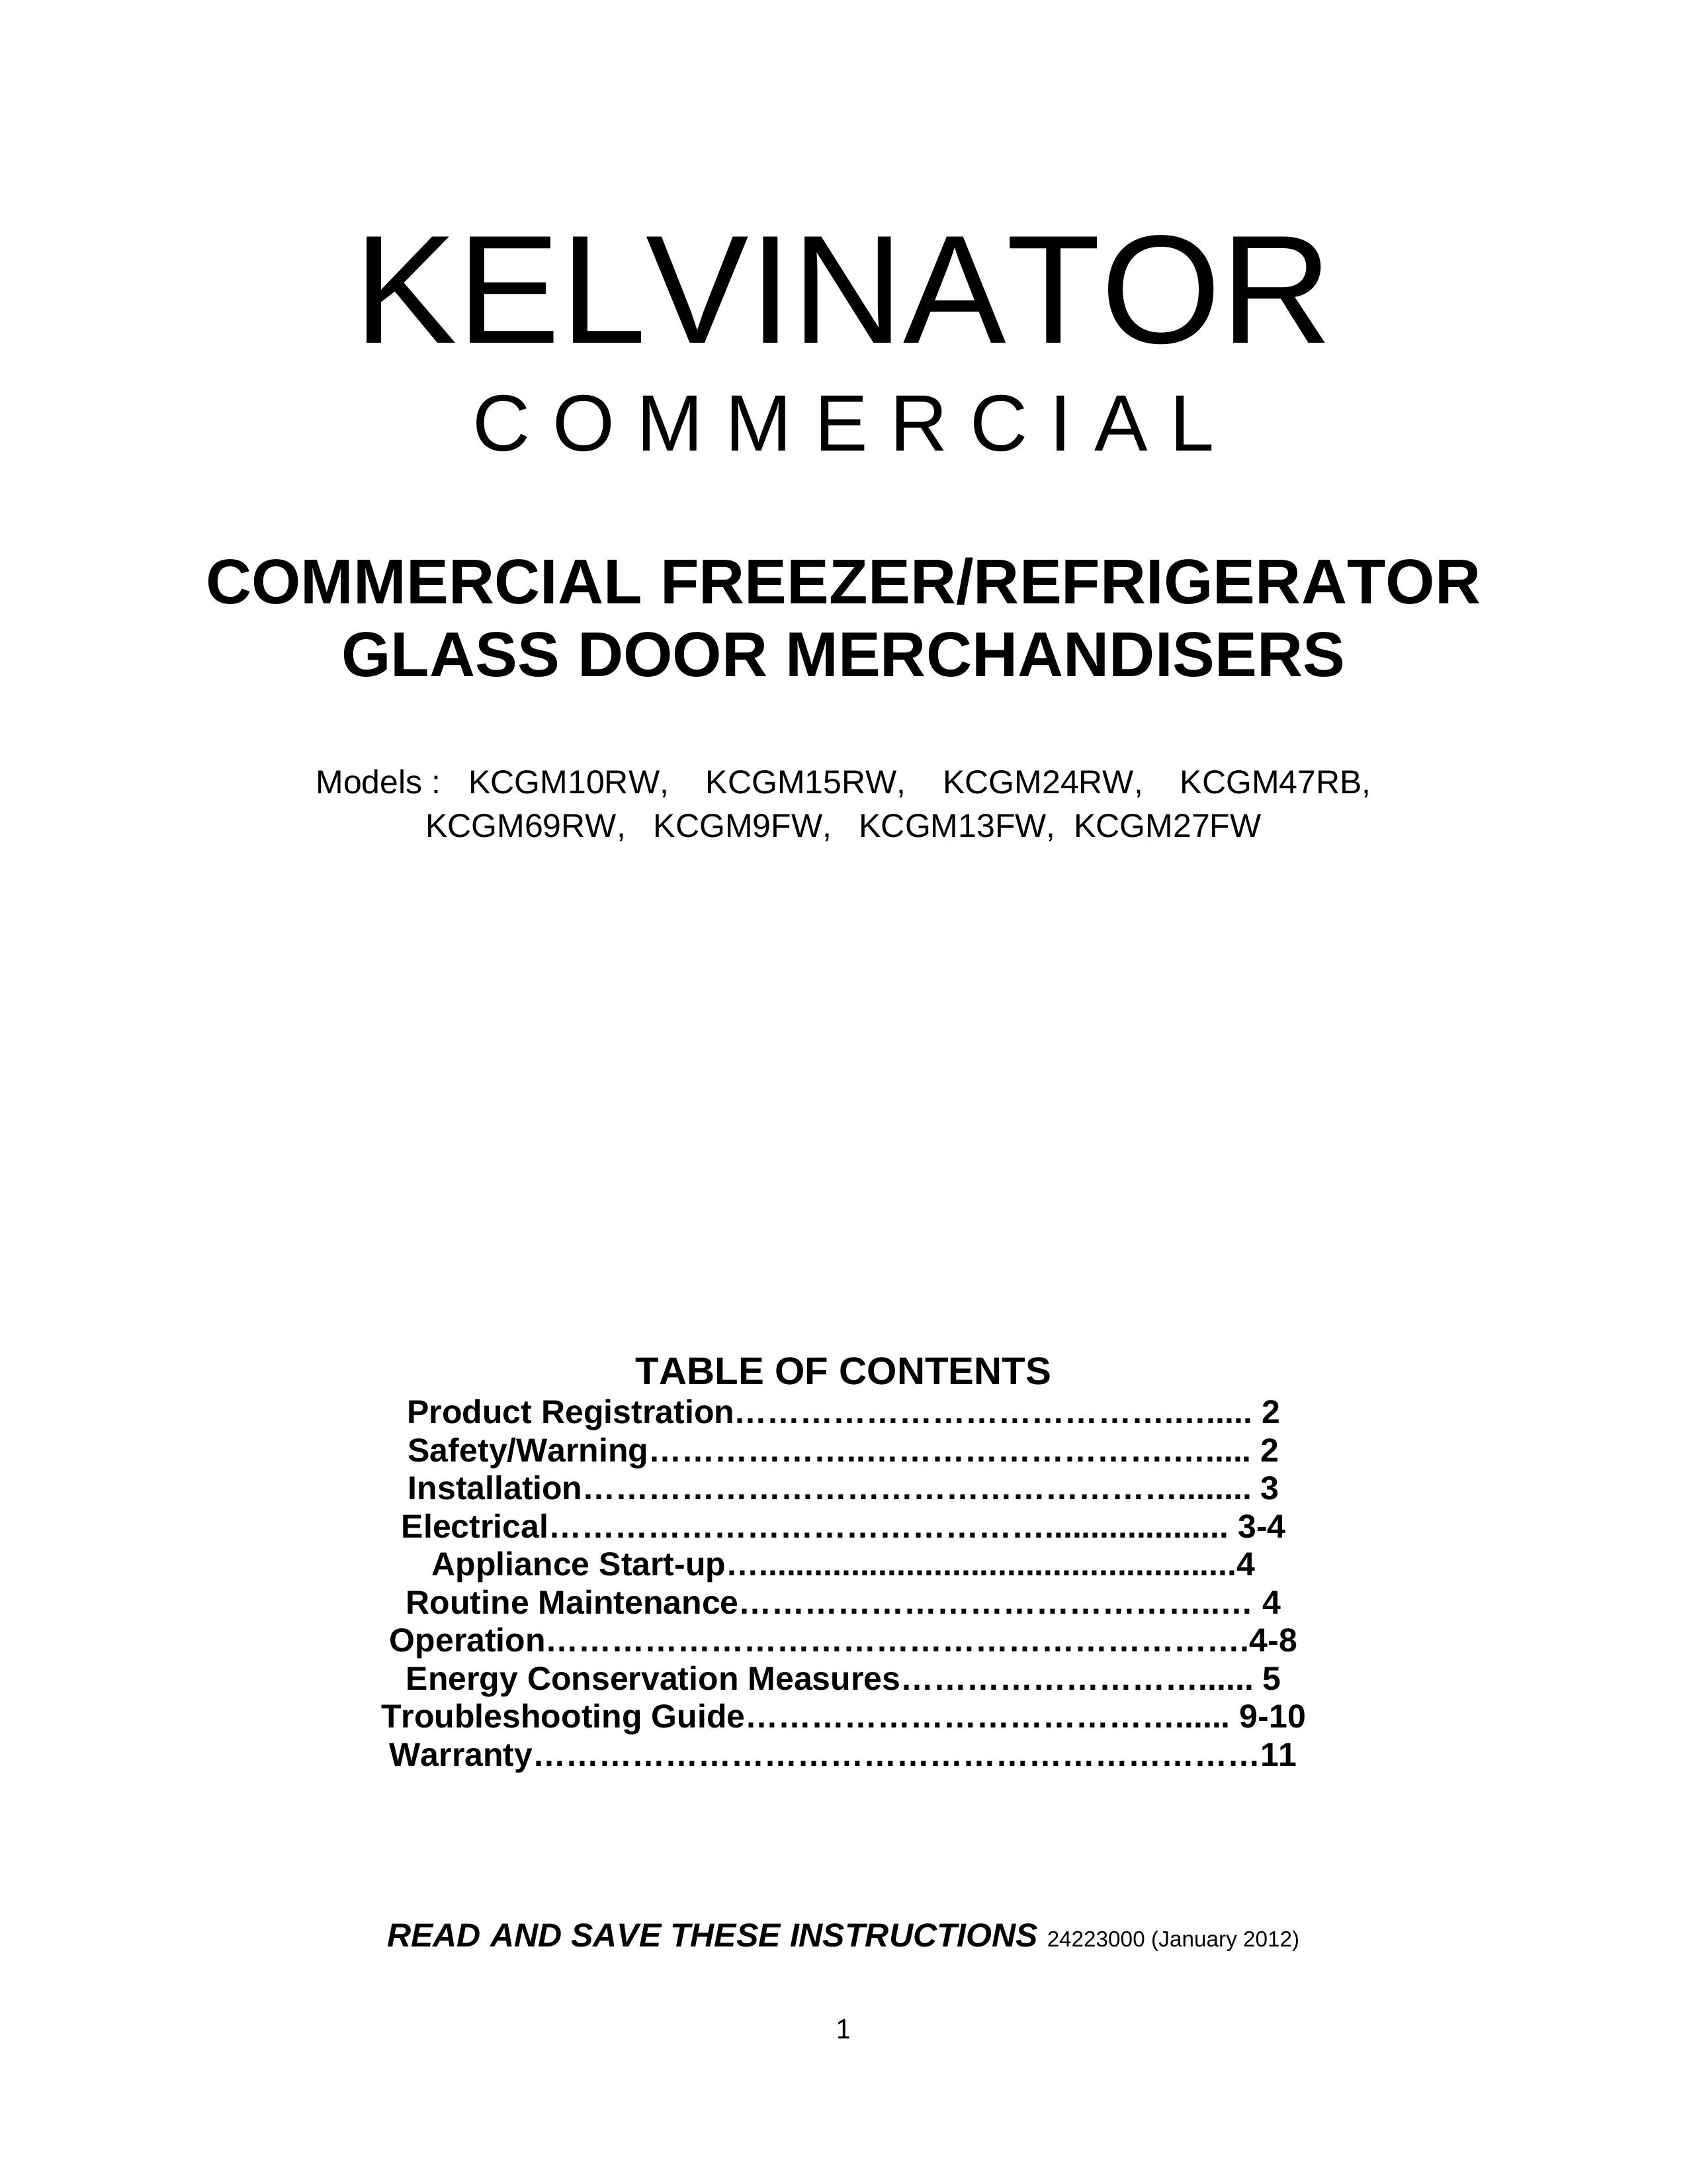 Kelvinator KCGM13FW Refrigerator User Manual